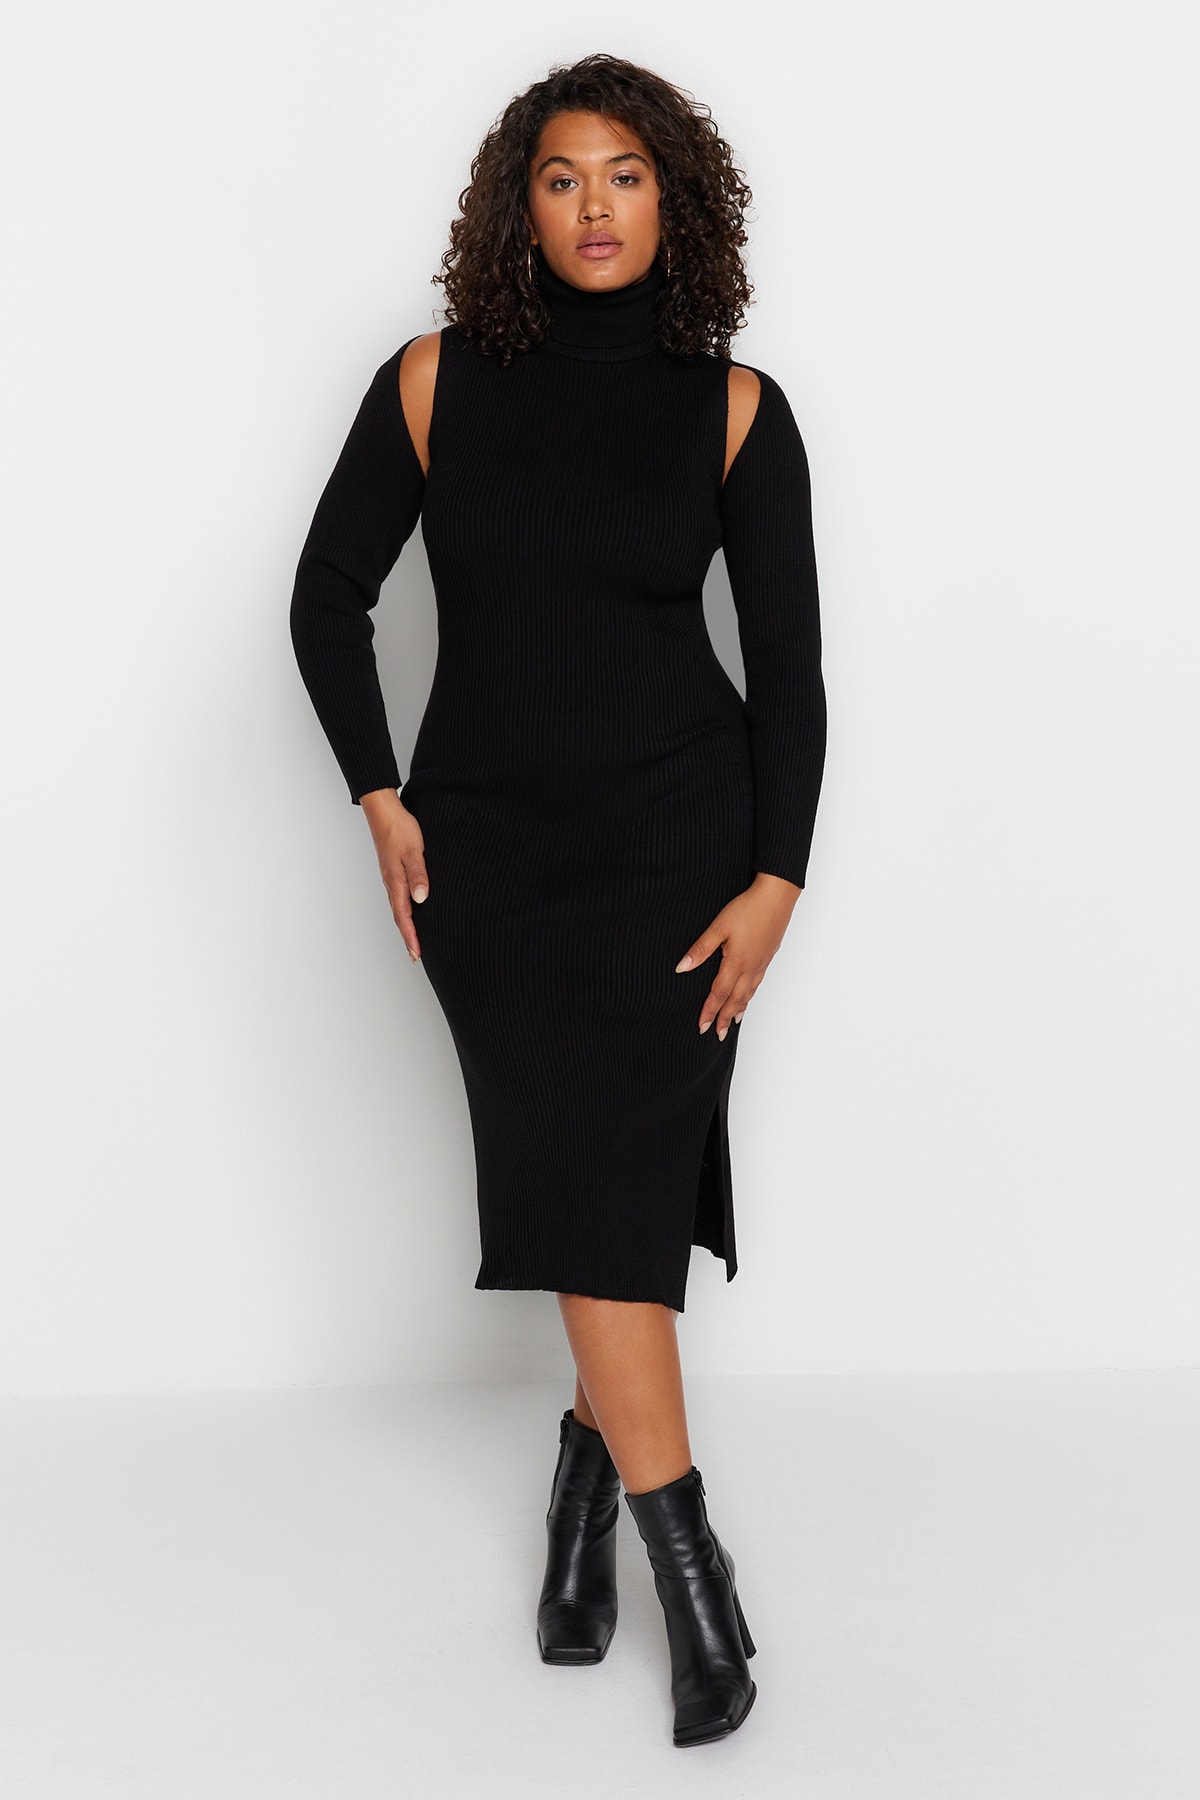 Trendyol Plus Size Black Stand-Up Collar Thin Knitwear Bolero & Dress Suit